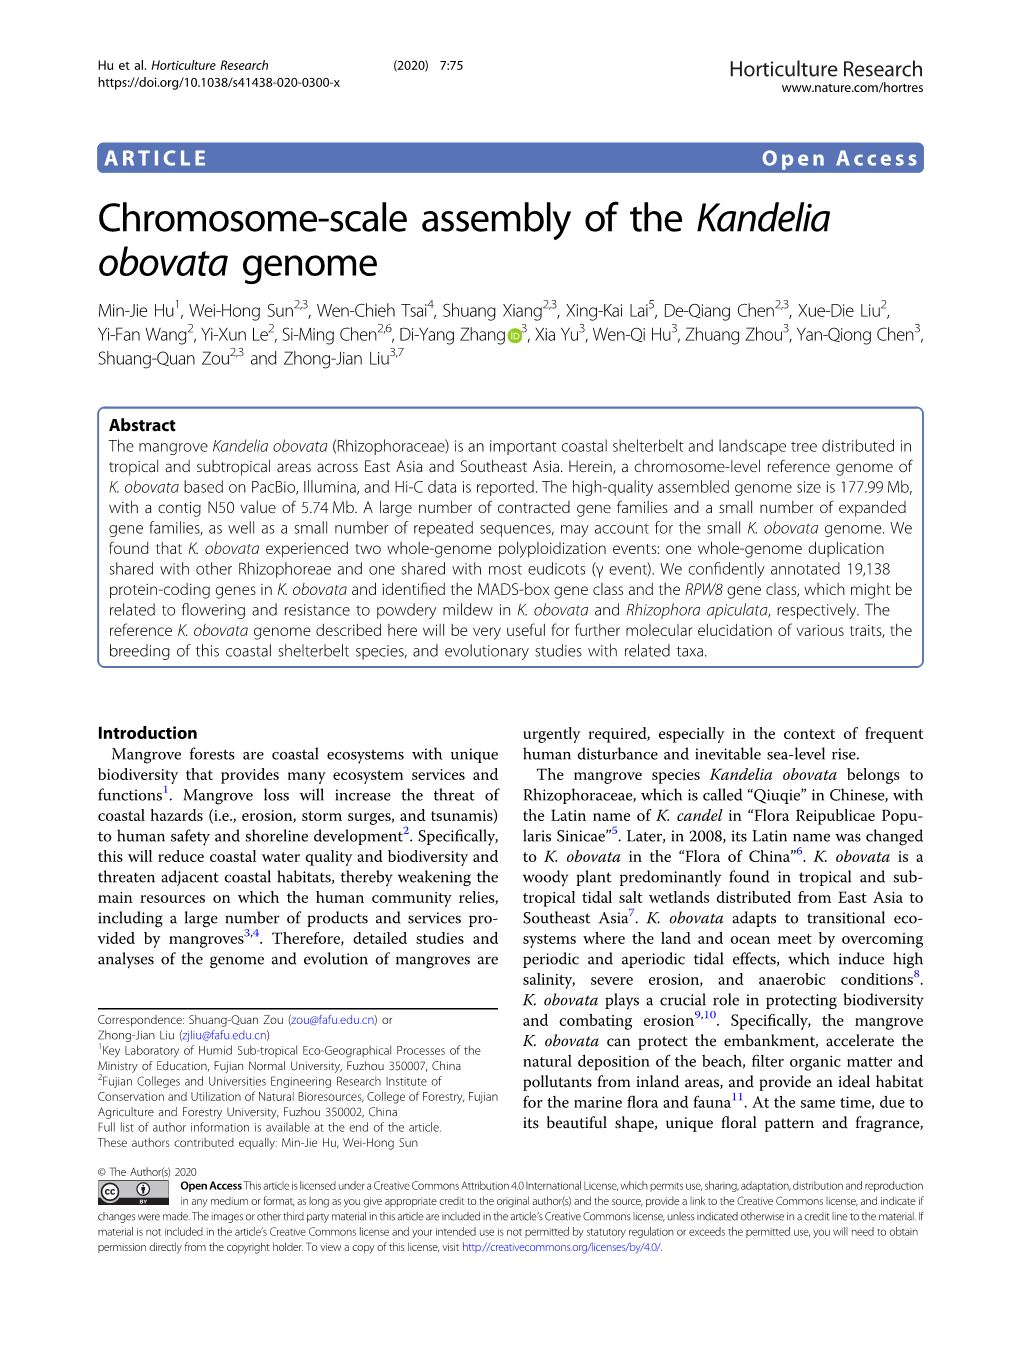 Chromosome-Scale Assembly of the Kandelia Obovata Genome